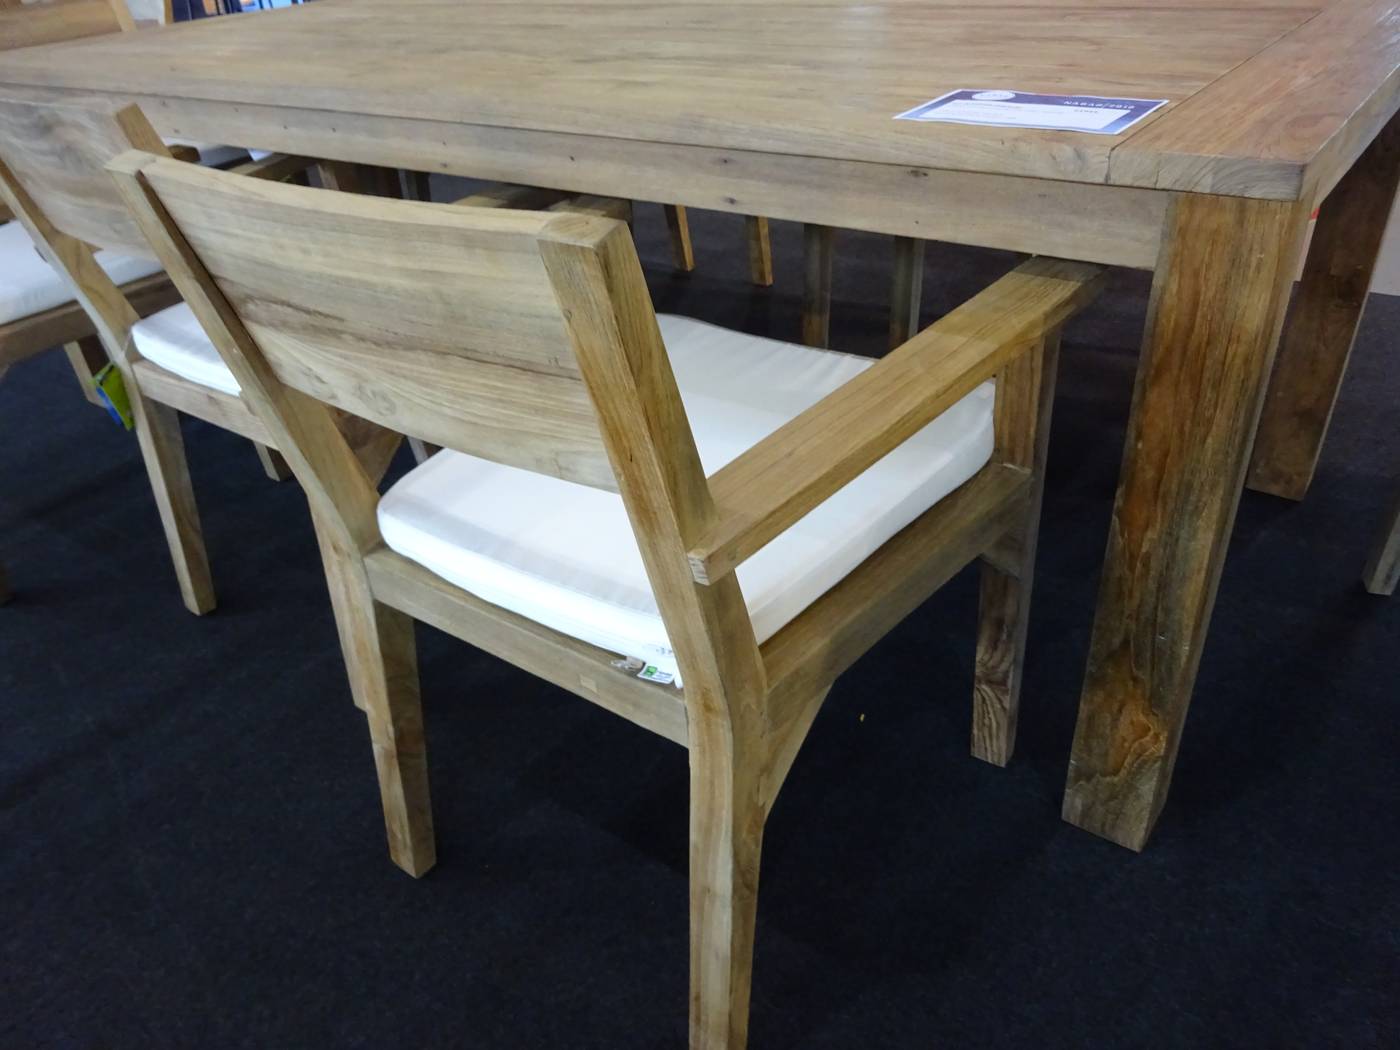 Set Madera Teka Windsor-250/8 - Conjunto para jardín de teka lux: 8 sillones con cojines y mesa de madera de teka de 250 cm